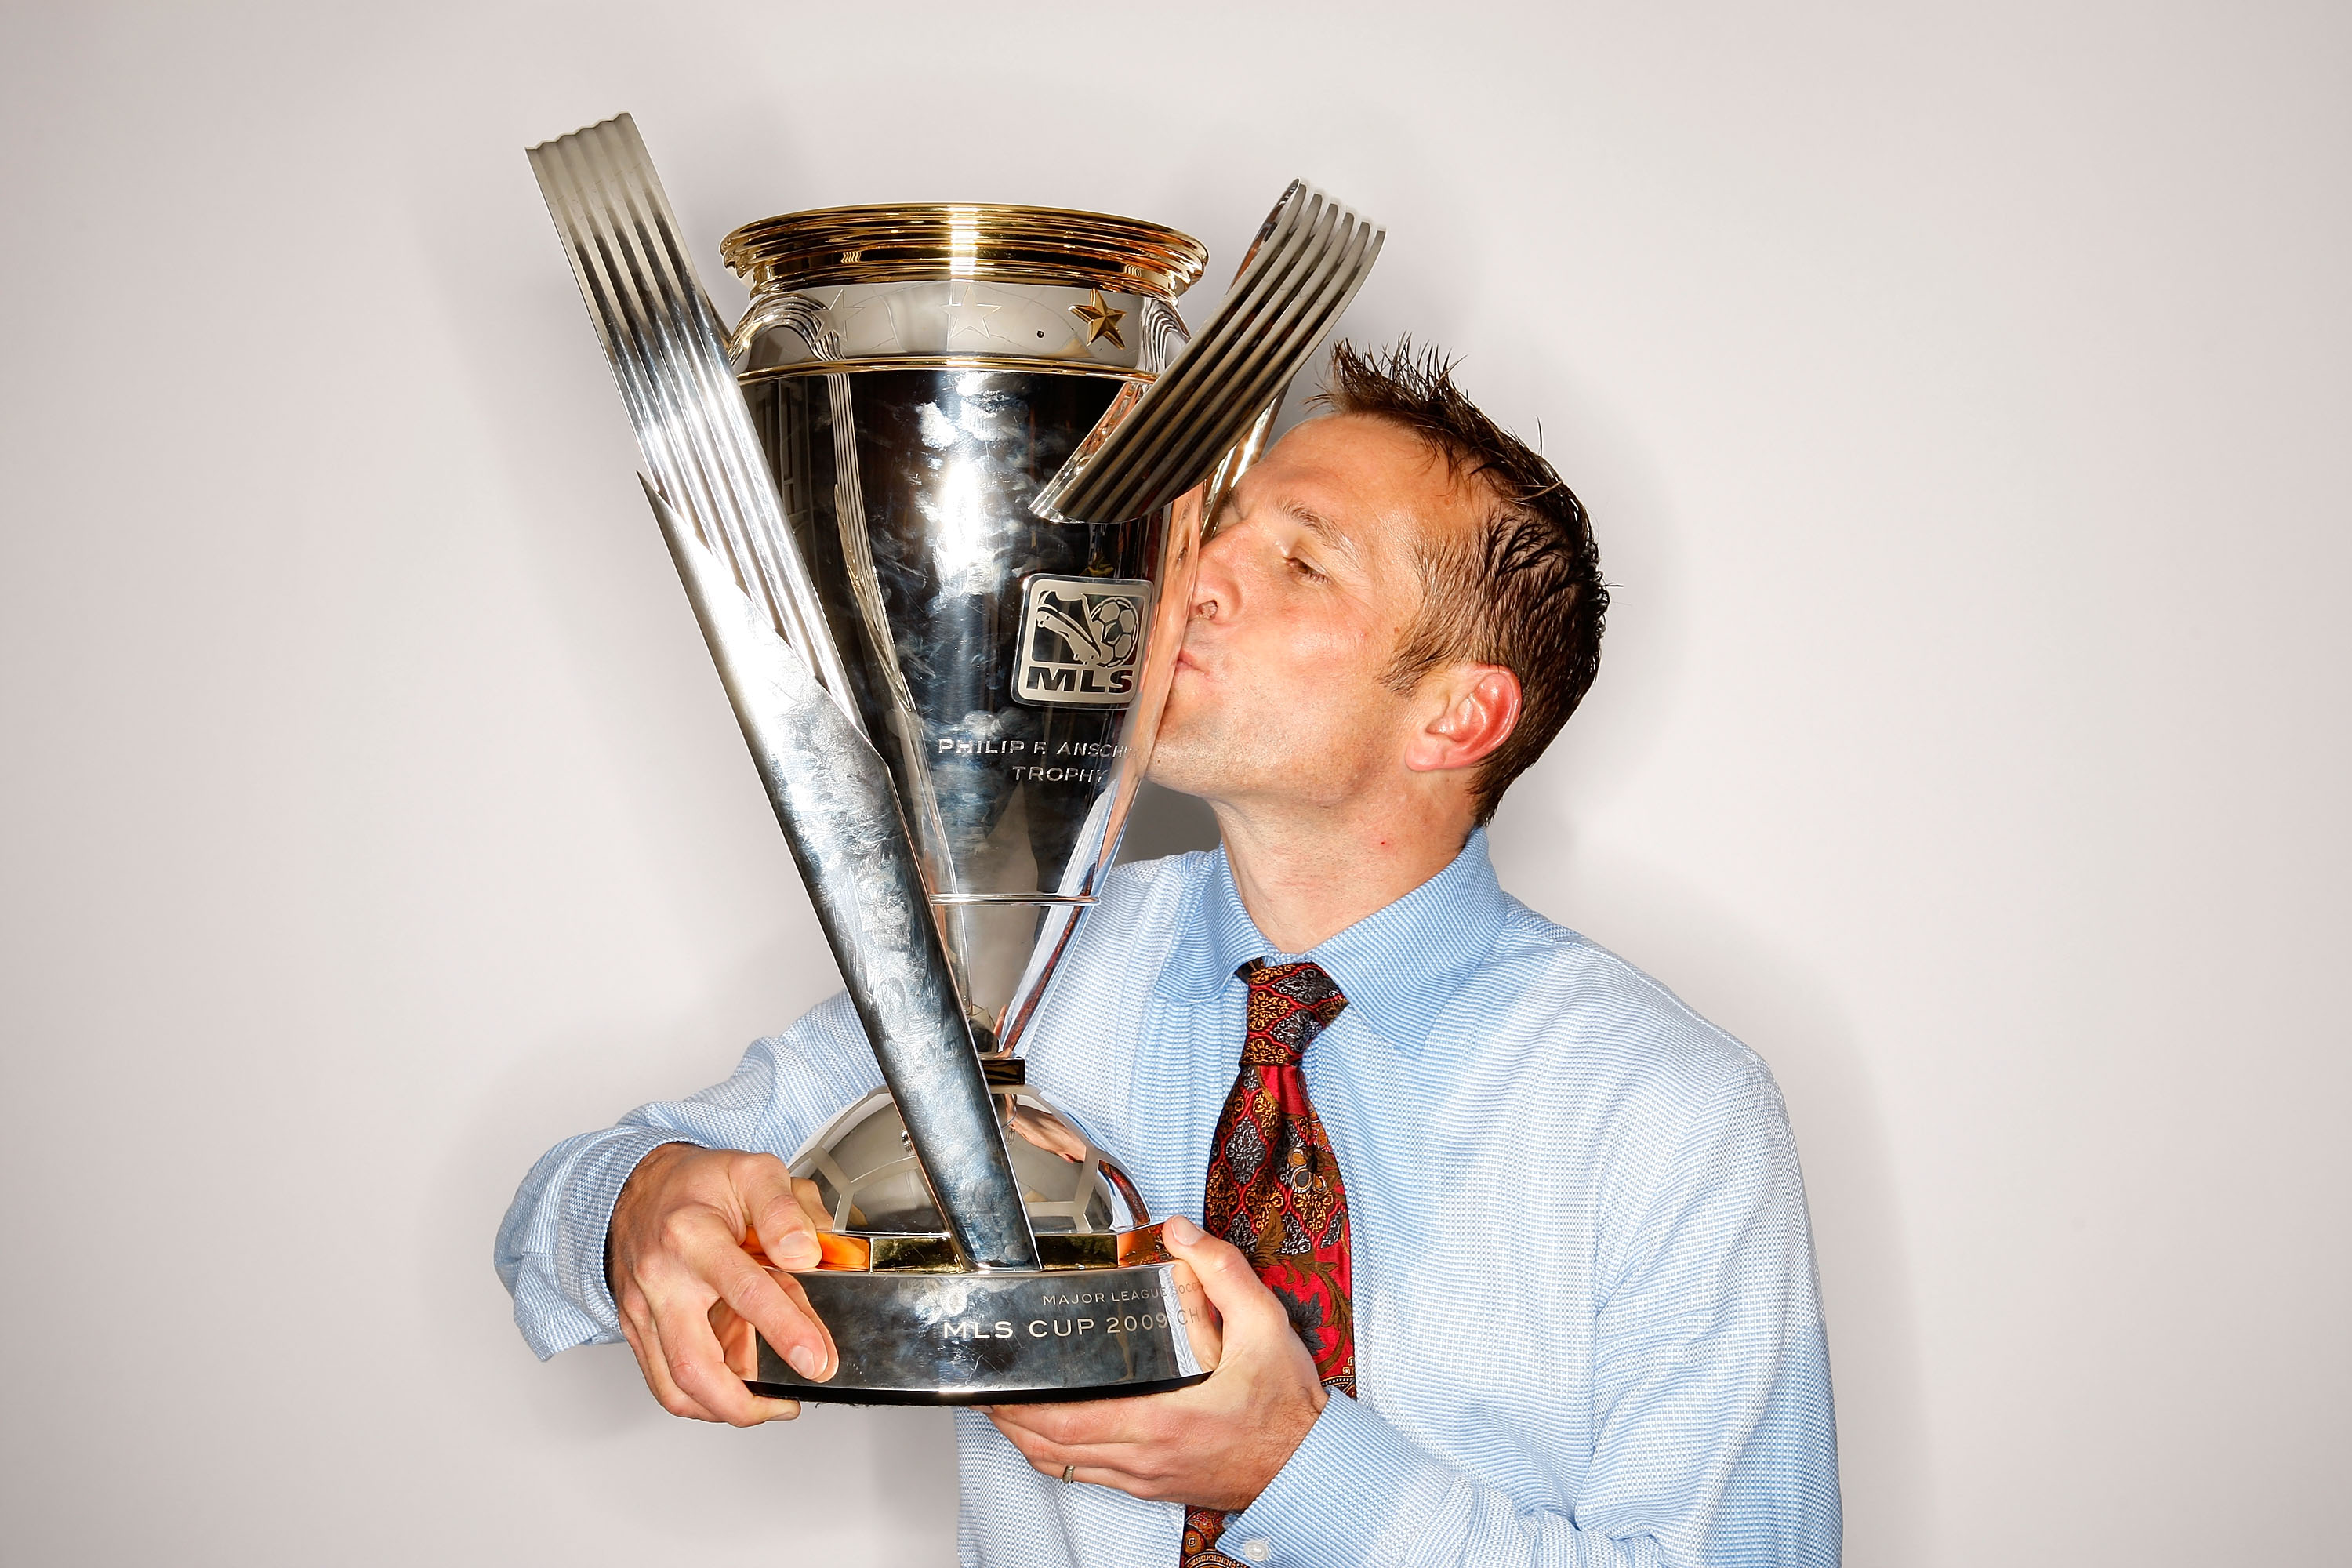 Jason Kreis led Real Salt Lake to the MLS Cup Championship in 2009